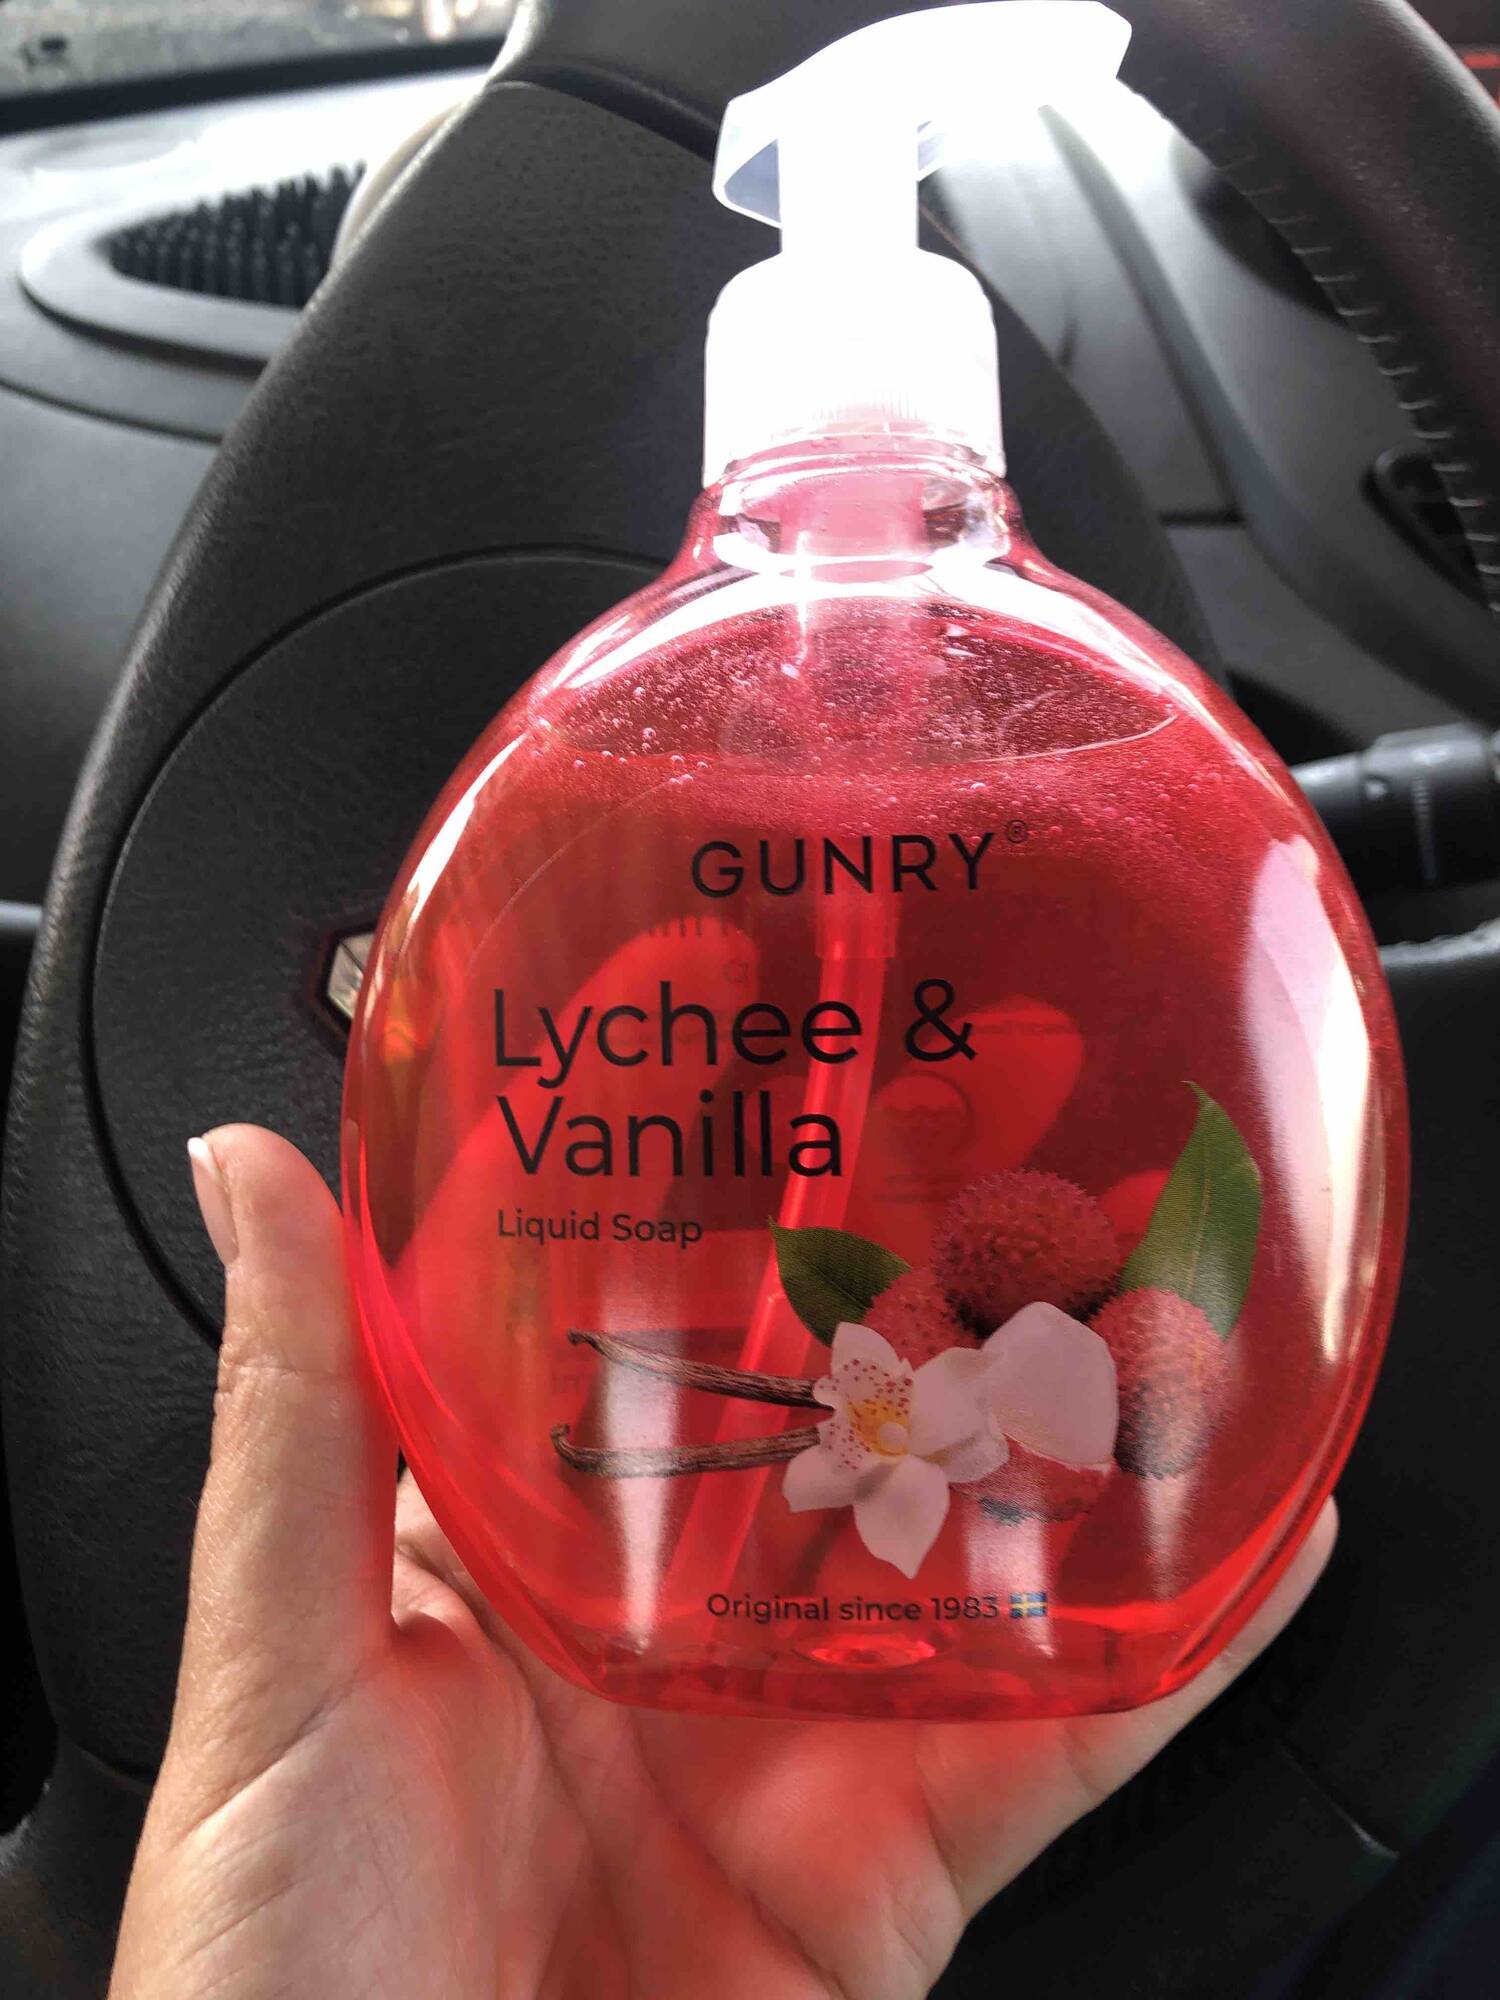 GUNRY - Lychee & vanilla - Liquid soap